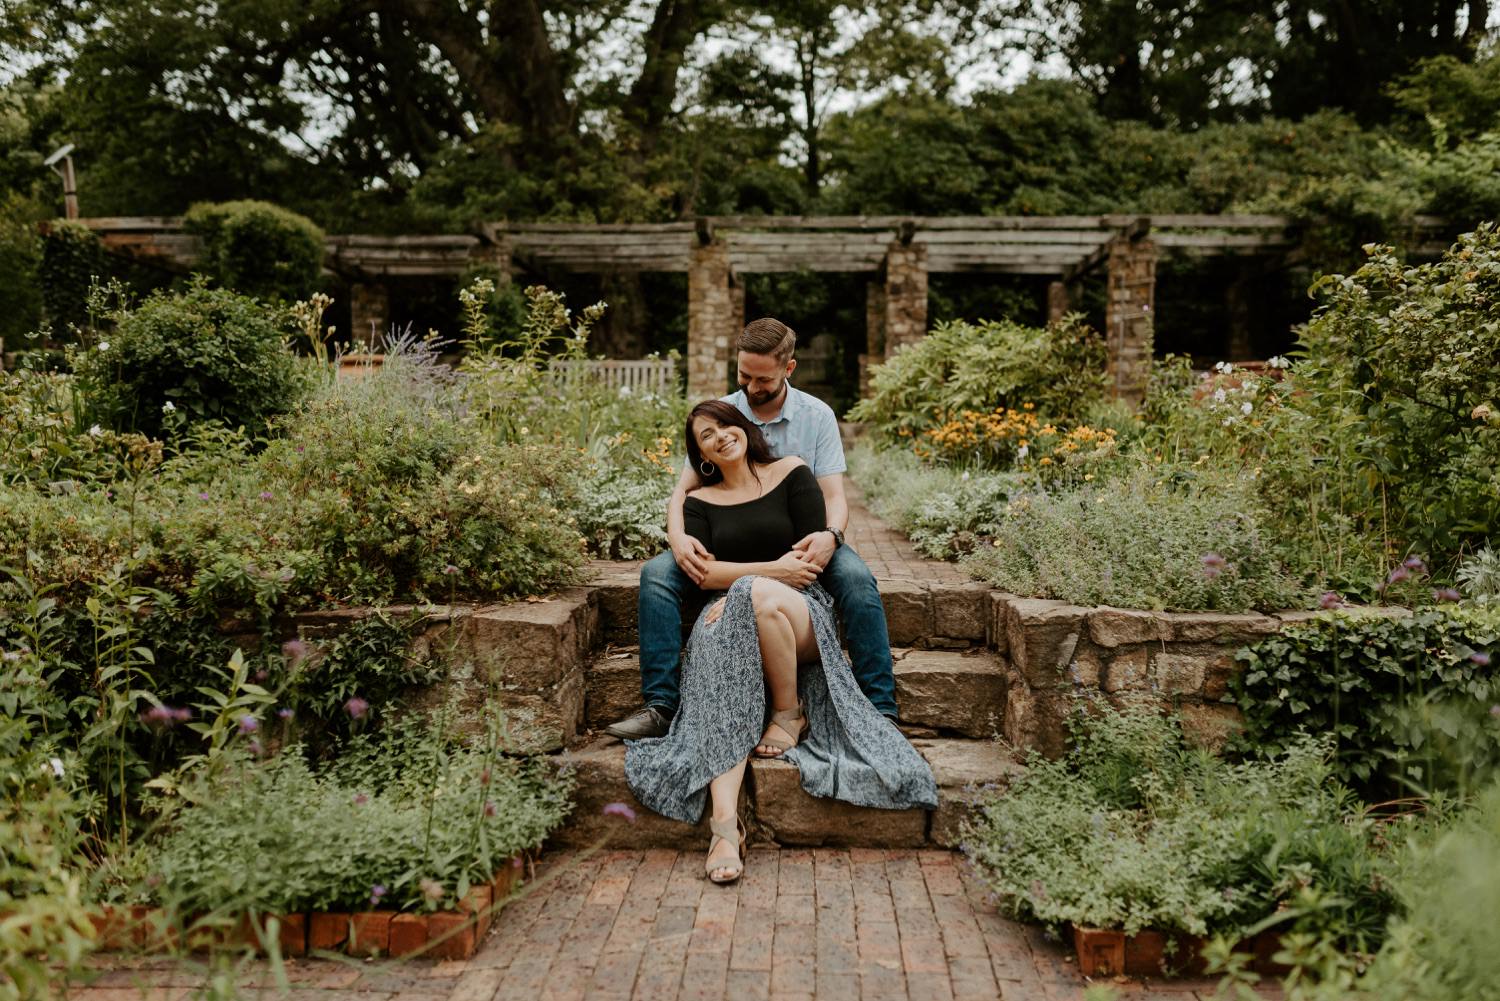 Cross Estate Gardens Summer Engagement Session New Jersey Wedding Photographer Anais Possamai Photography 016